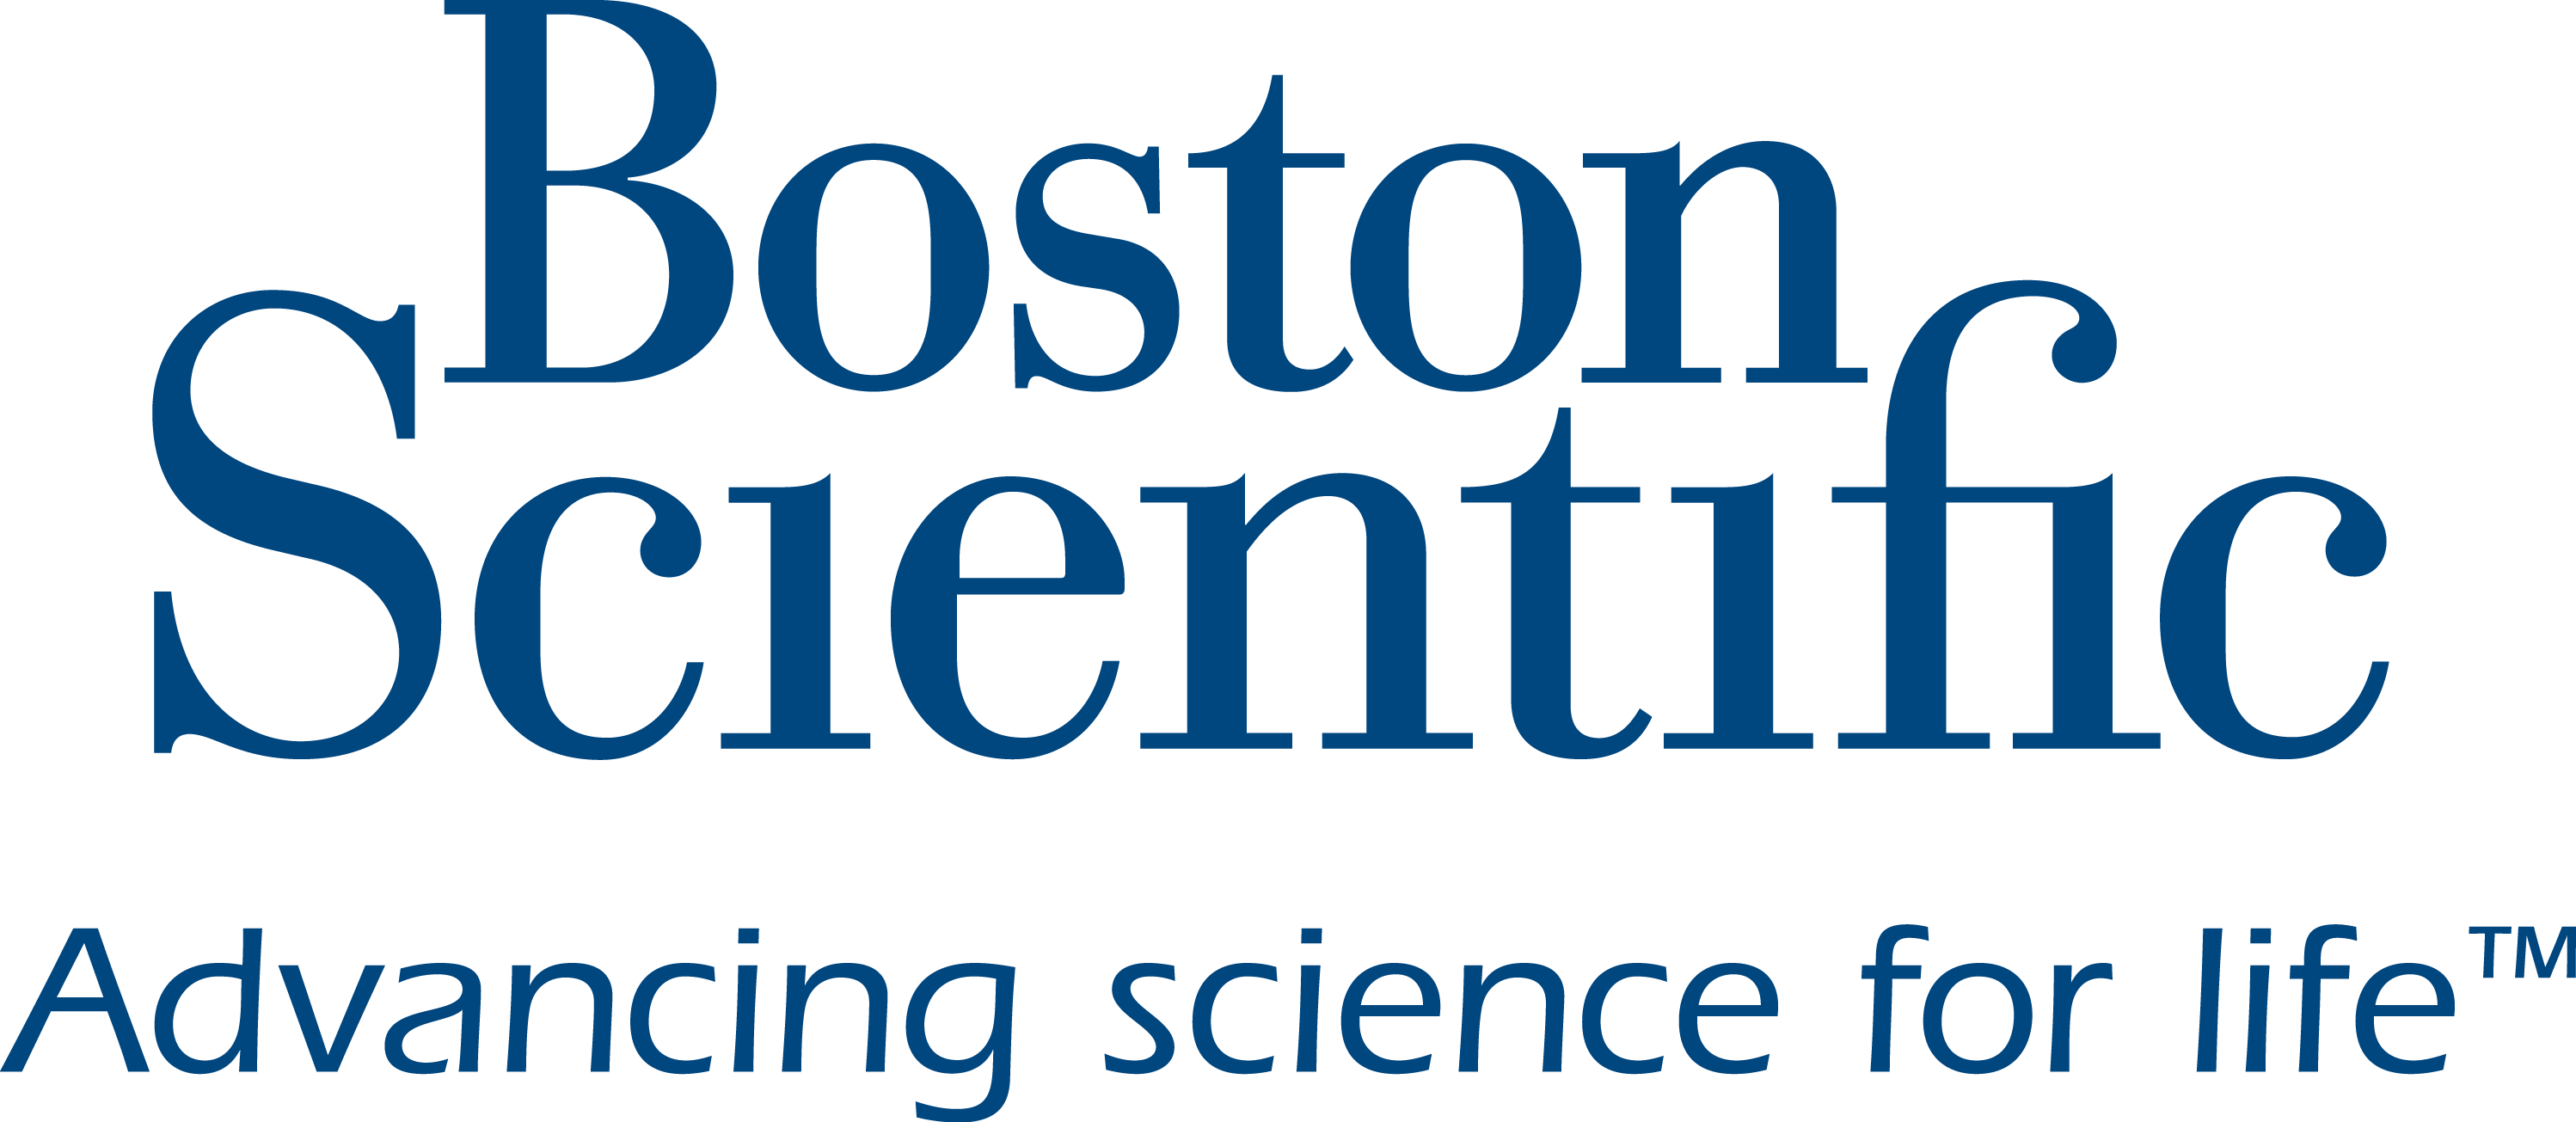 boston scientific logo 2